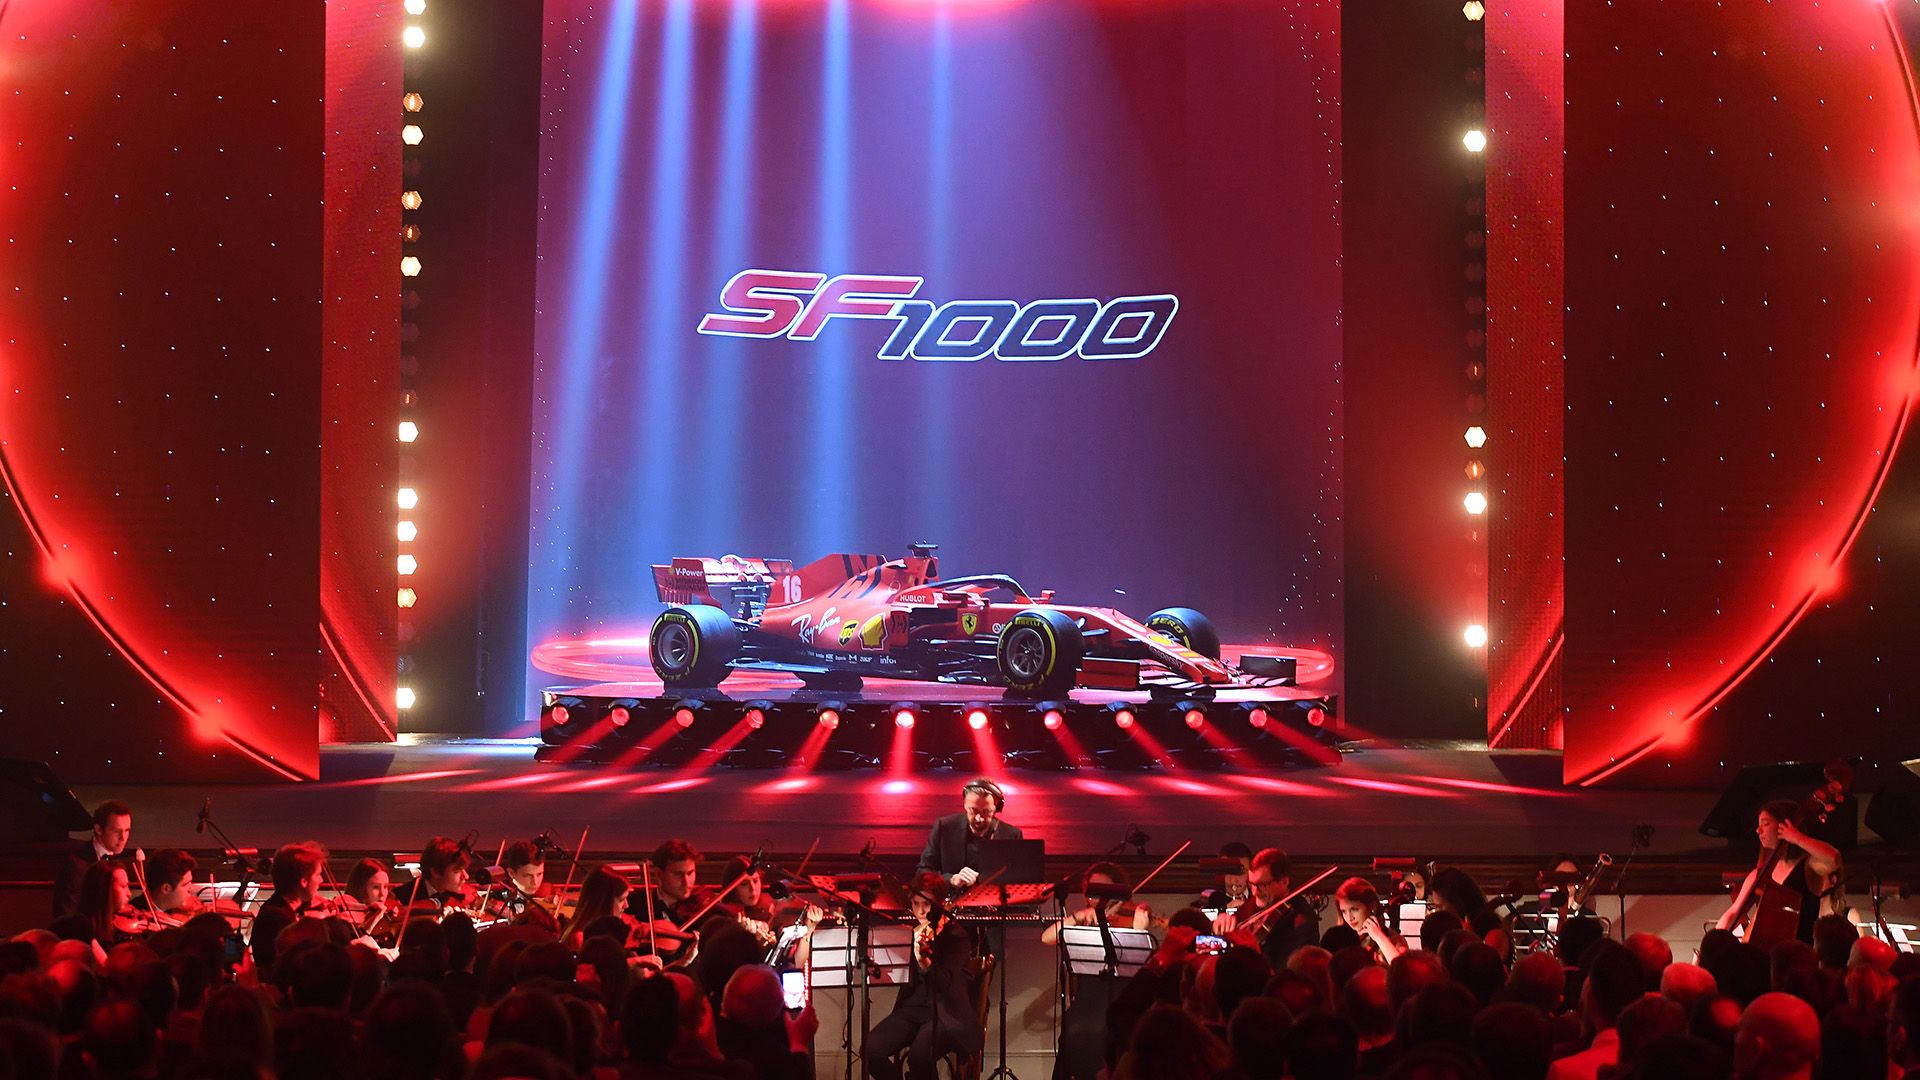 GALLERY: Ferrari SF1000 launch: Ferrari unveil their 2020 F1 car